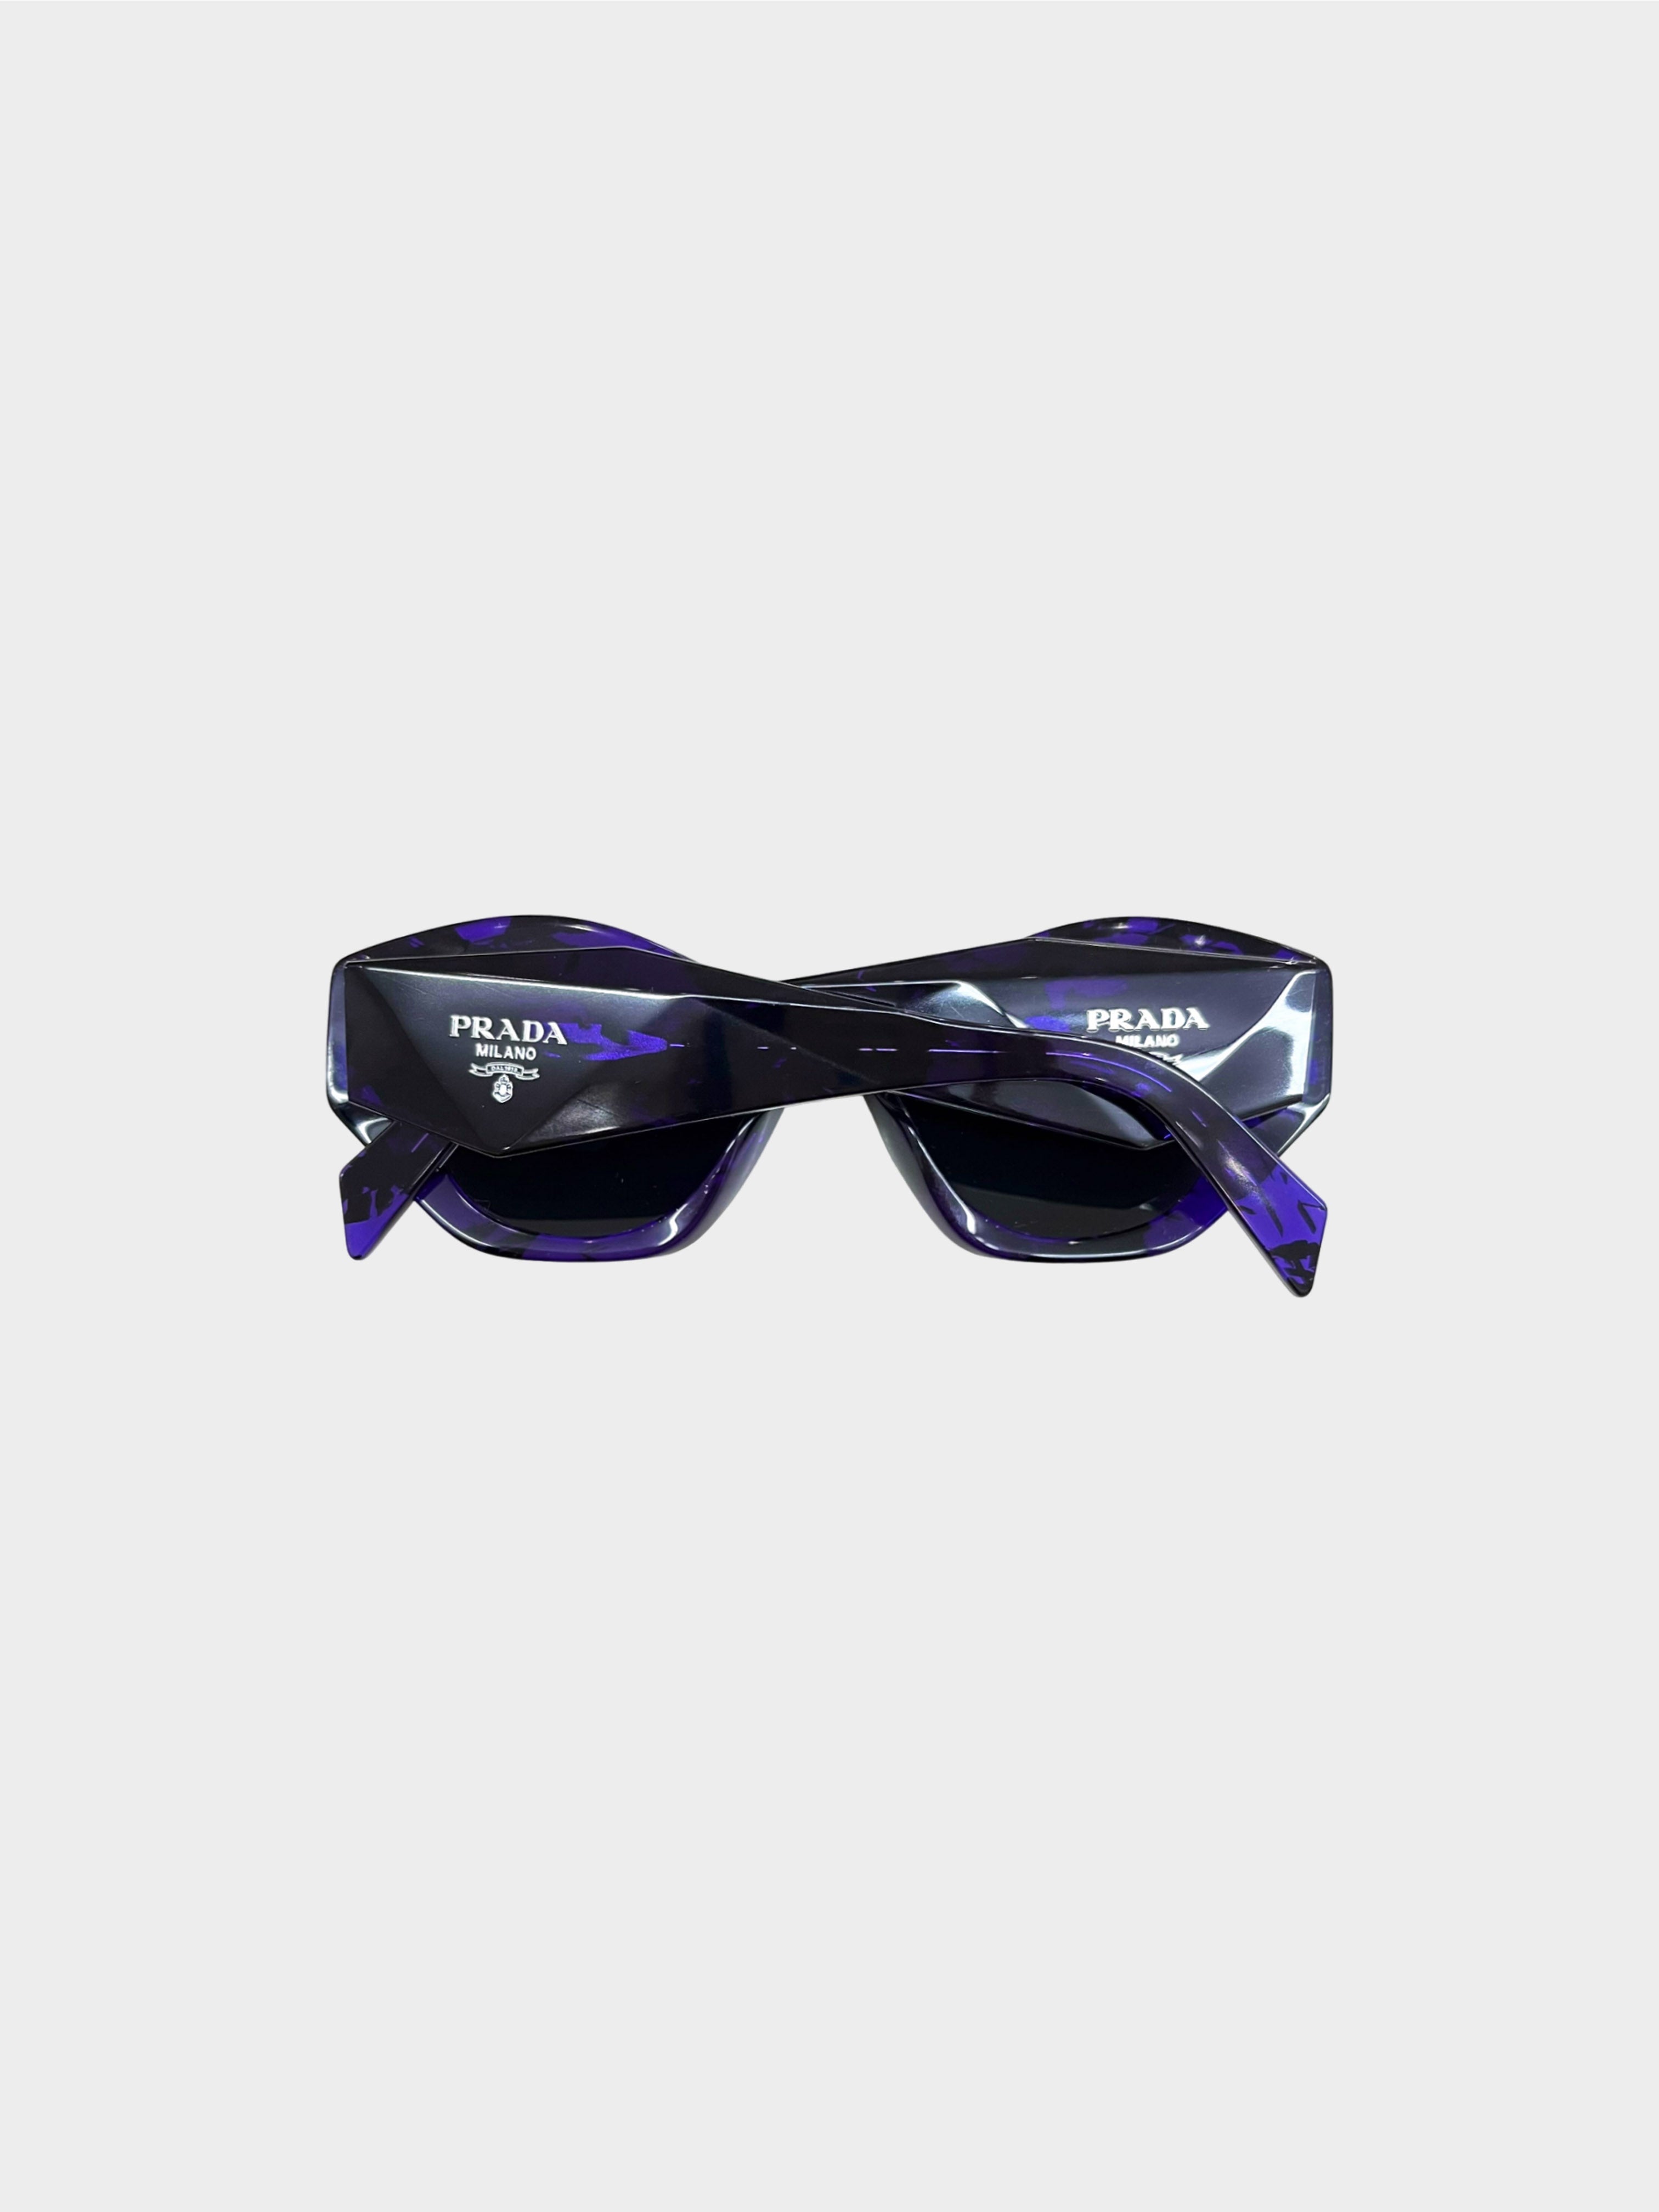 Prada 2023 Black and Purple Abstract Cat Eye Sunglasses